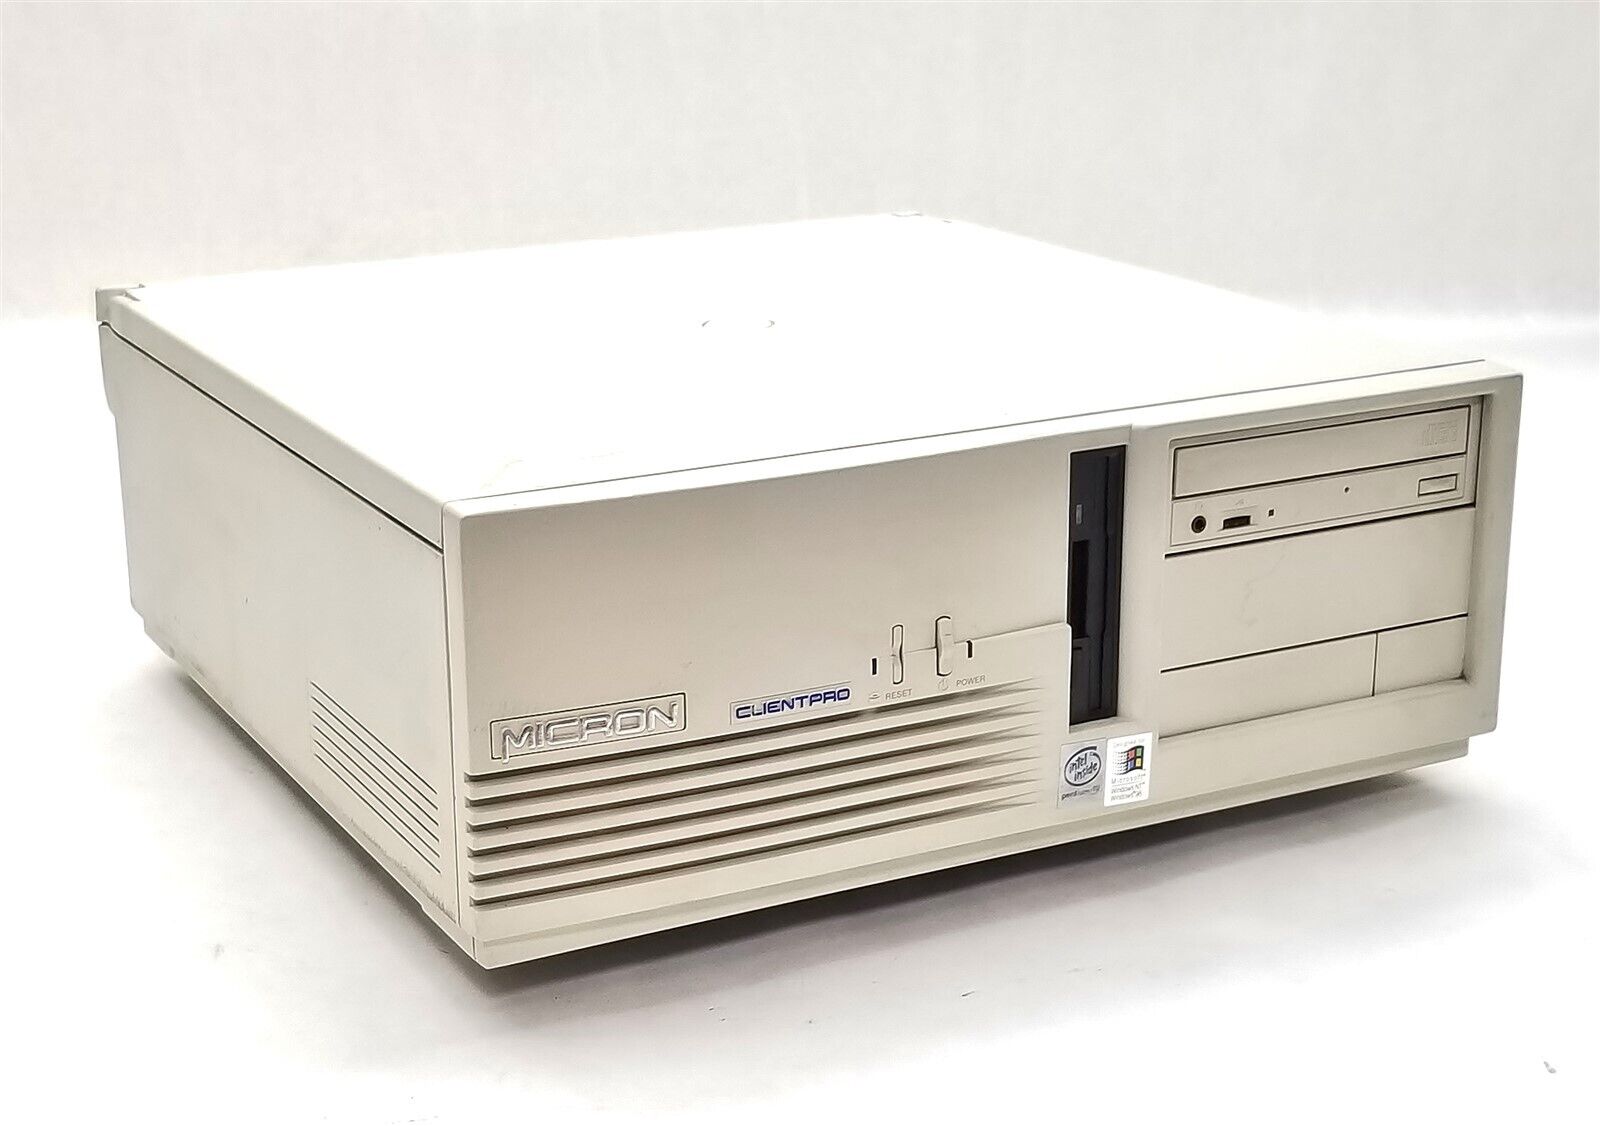 Micron Client Pro Pentium III 450MHz 320MB NO/HDD Vintage PC Retro S3 SAVAGE4 LT